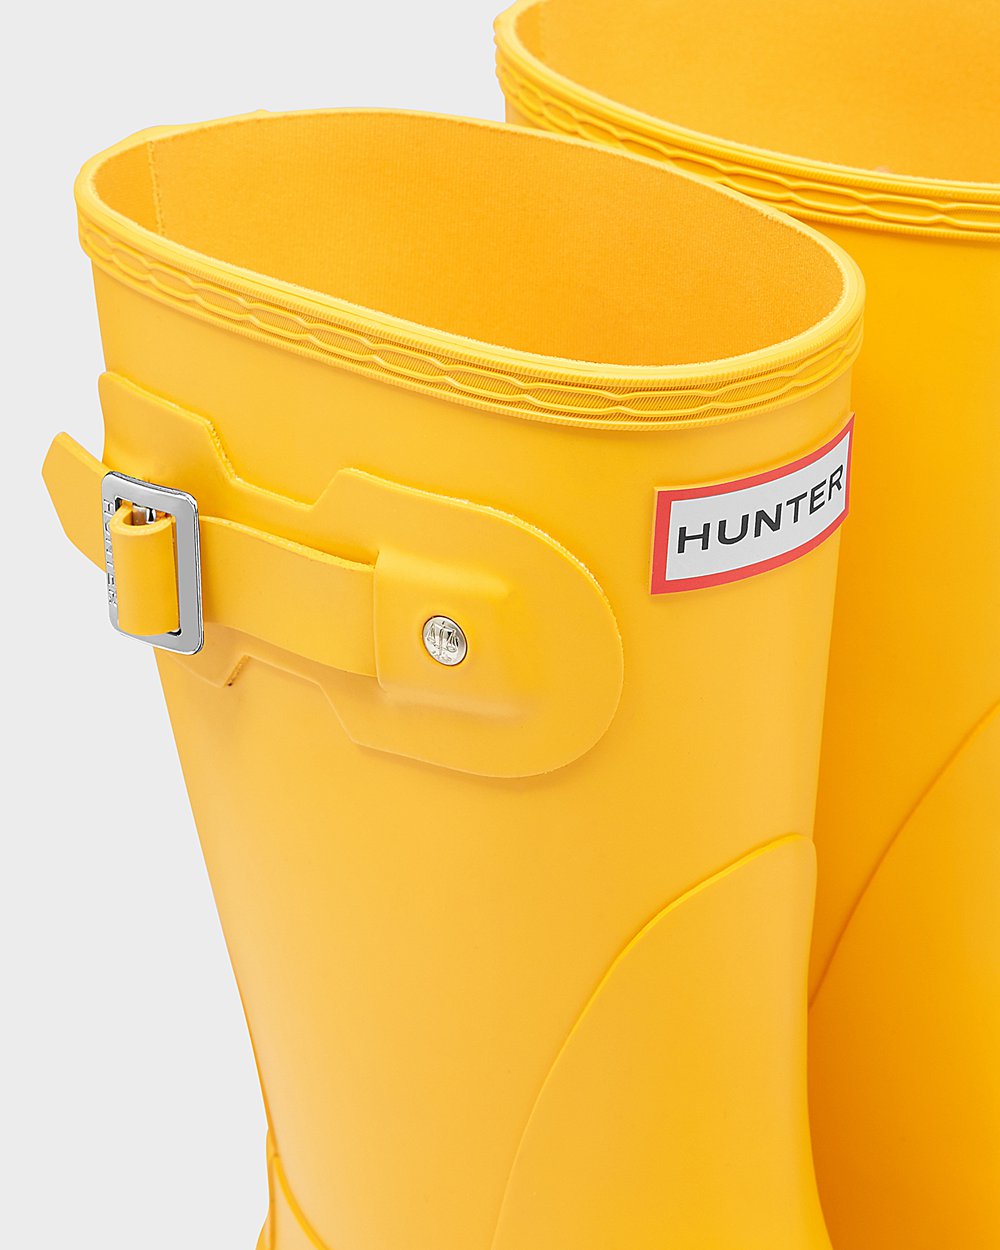 Womens Short Rain Boots - Hunter Original (10ONCVGHQ) - Yellow